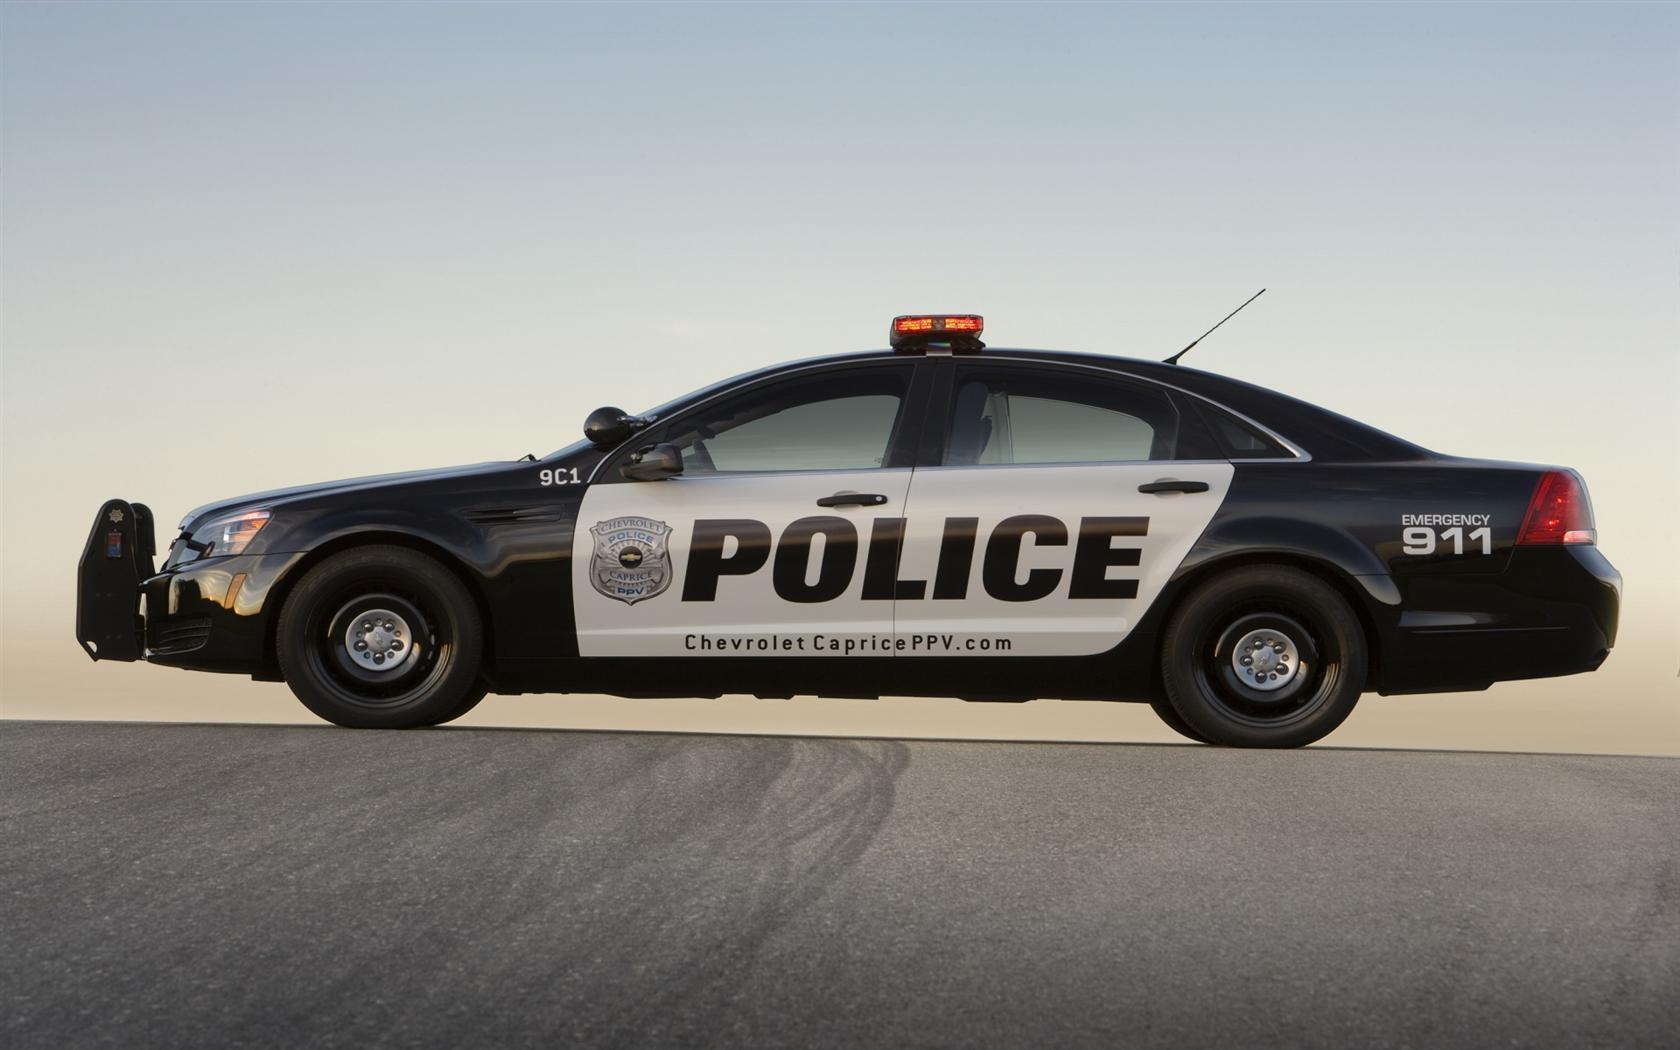 Chevrolet Caprice Police Car Image. Photo